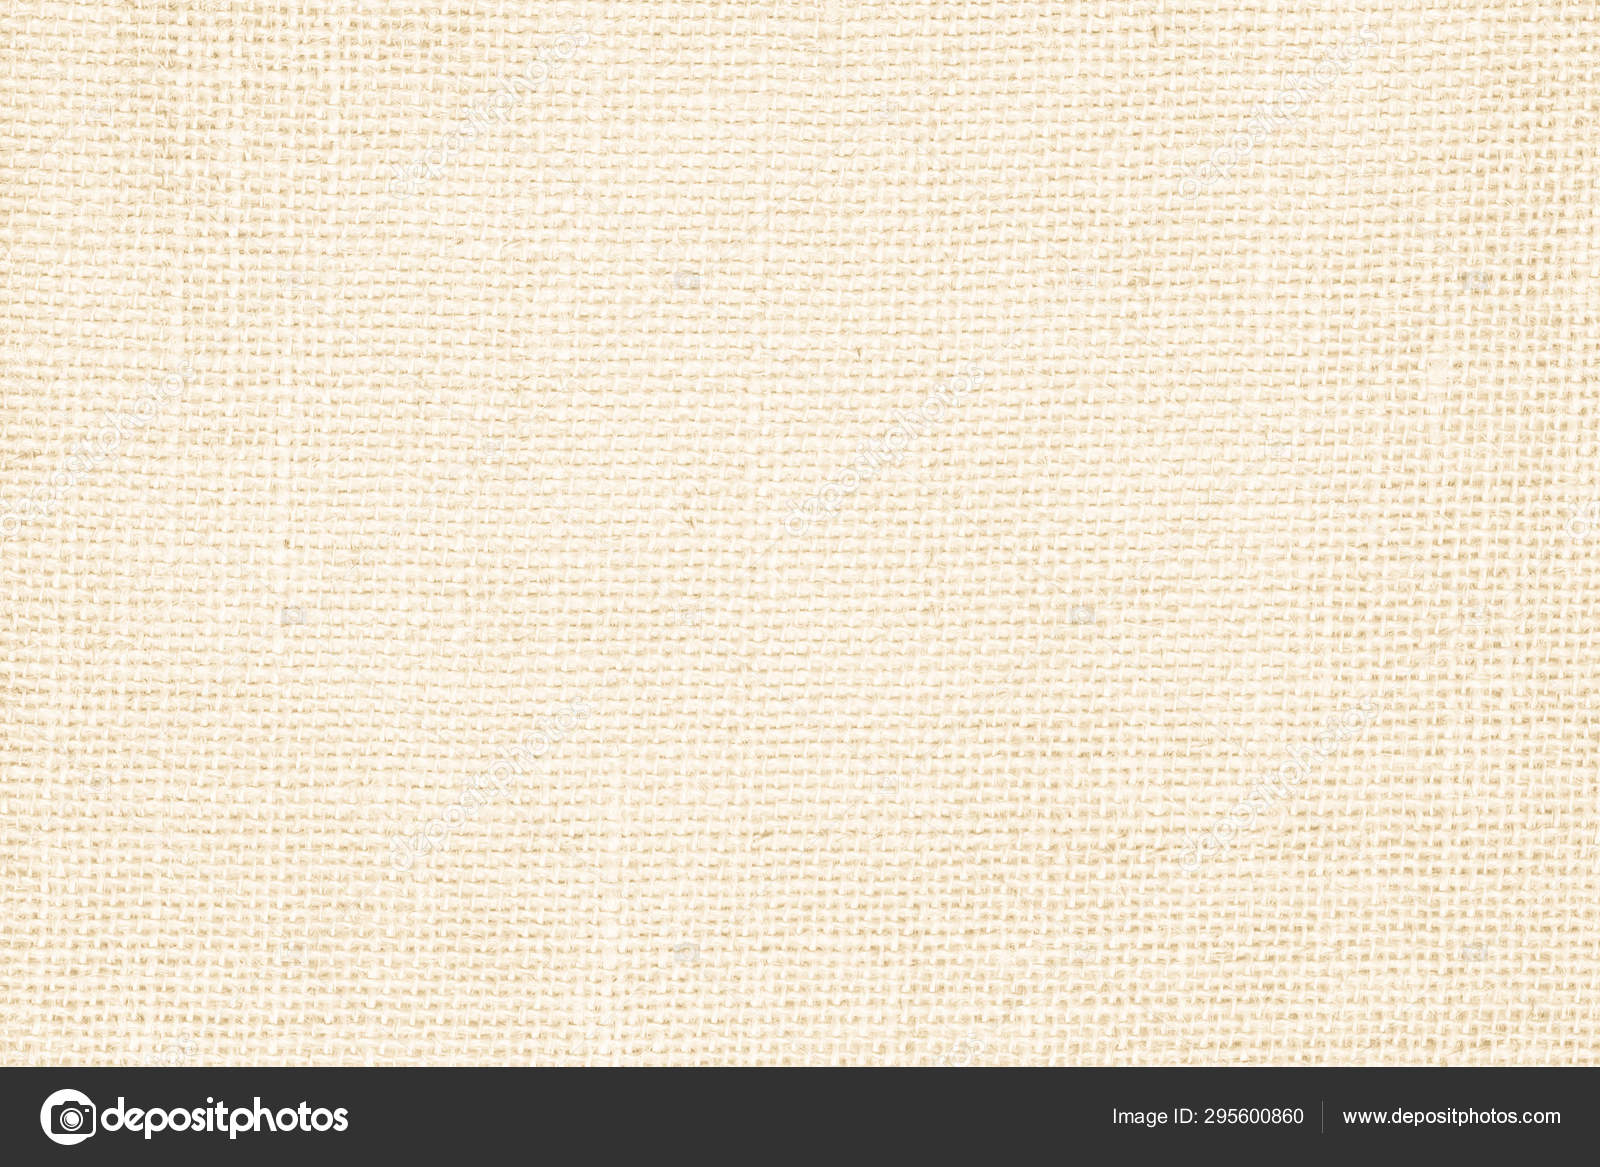 Cream texture canvas fabric background., Stock image